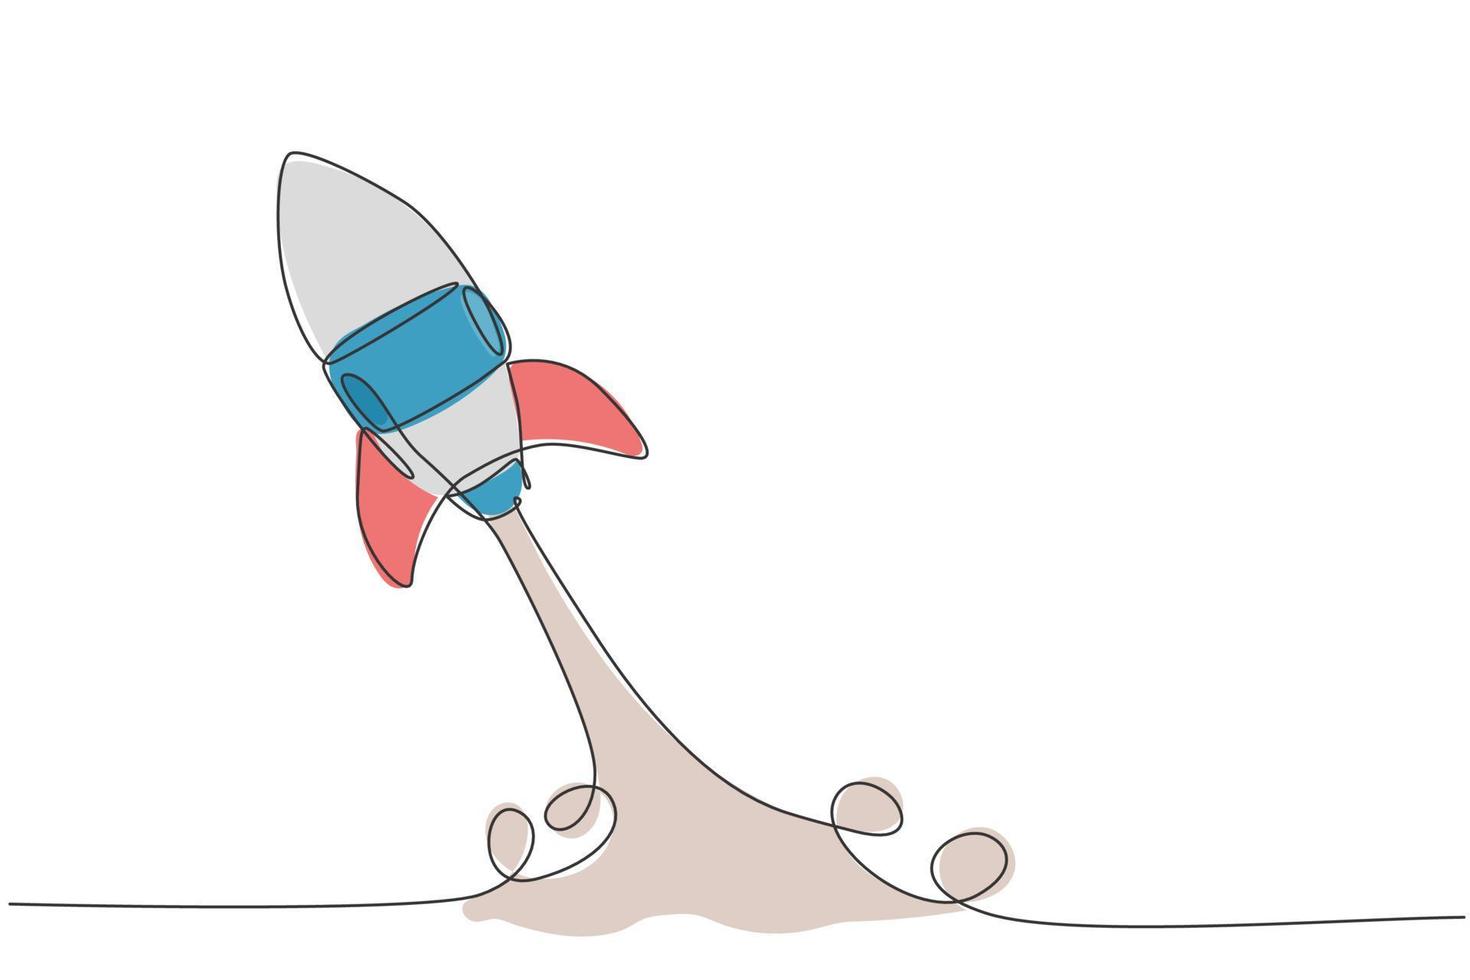 en kontinuerlig ritning av enkla retro rymdfarkoster som flyger upp till yttre rymdnebulosan. raket rymdskepp lansering i universum koncept. dynamisk enkel linje rita design vektor grafisk illustration